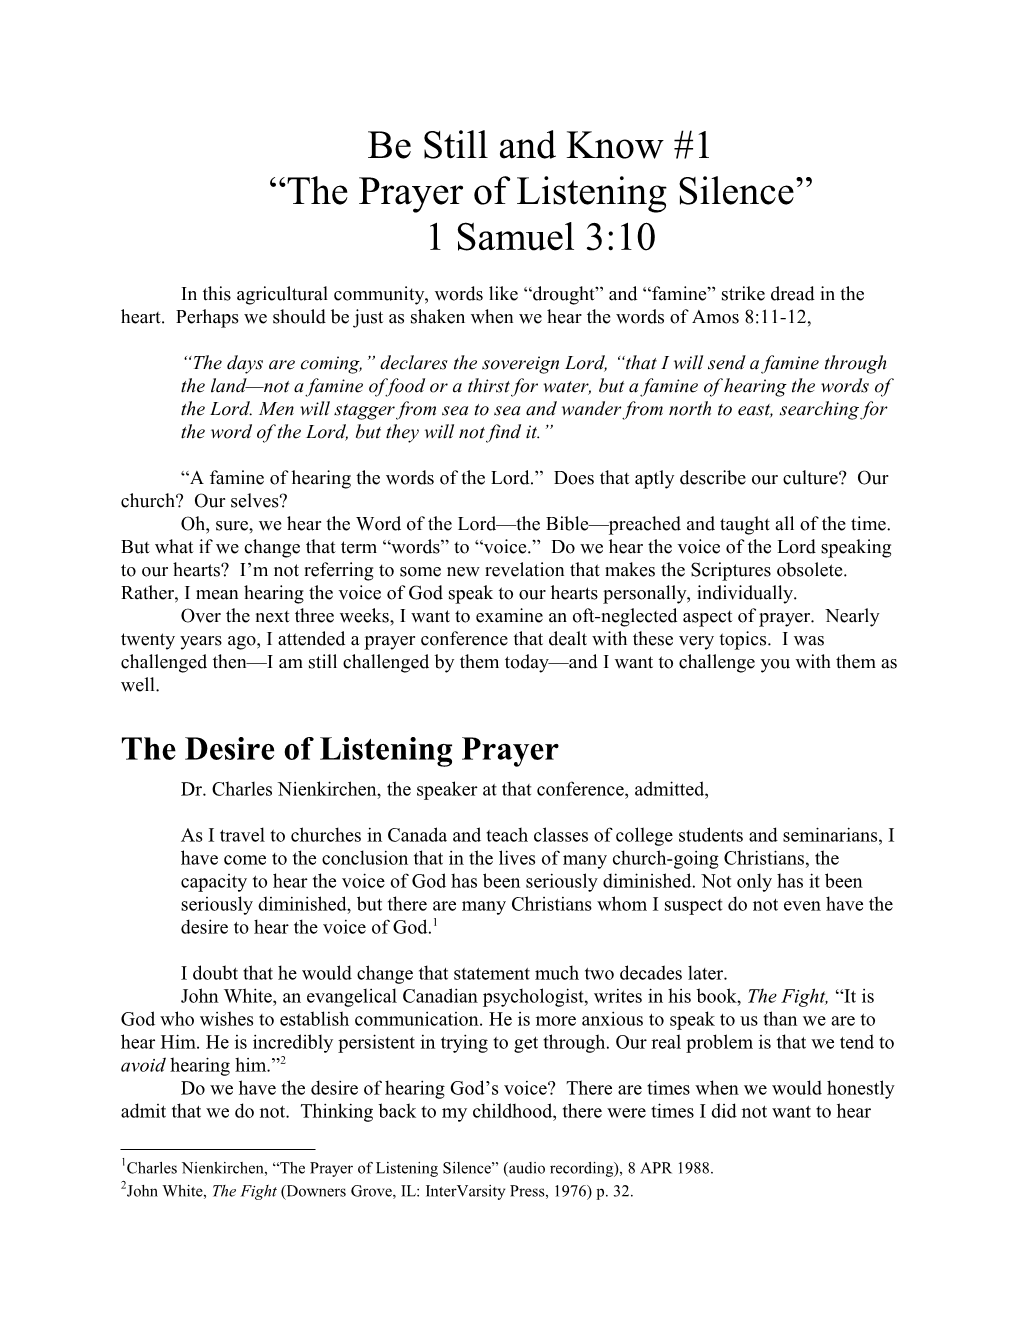 The Prayer of Listening Silence